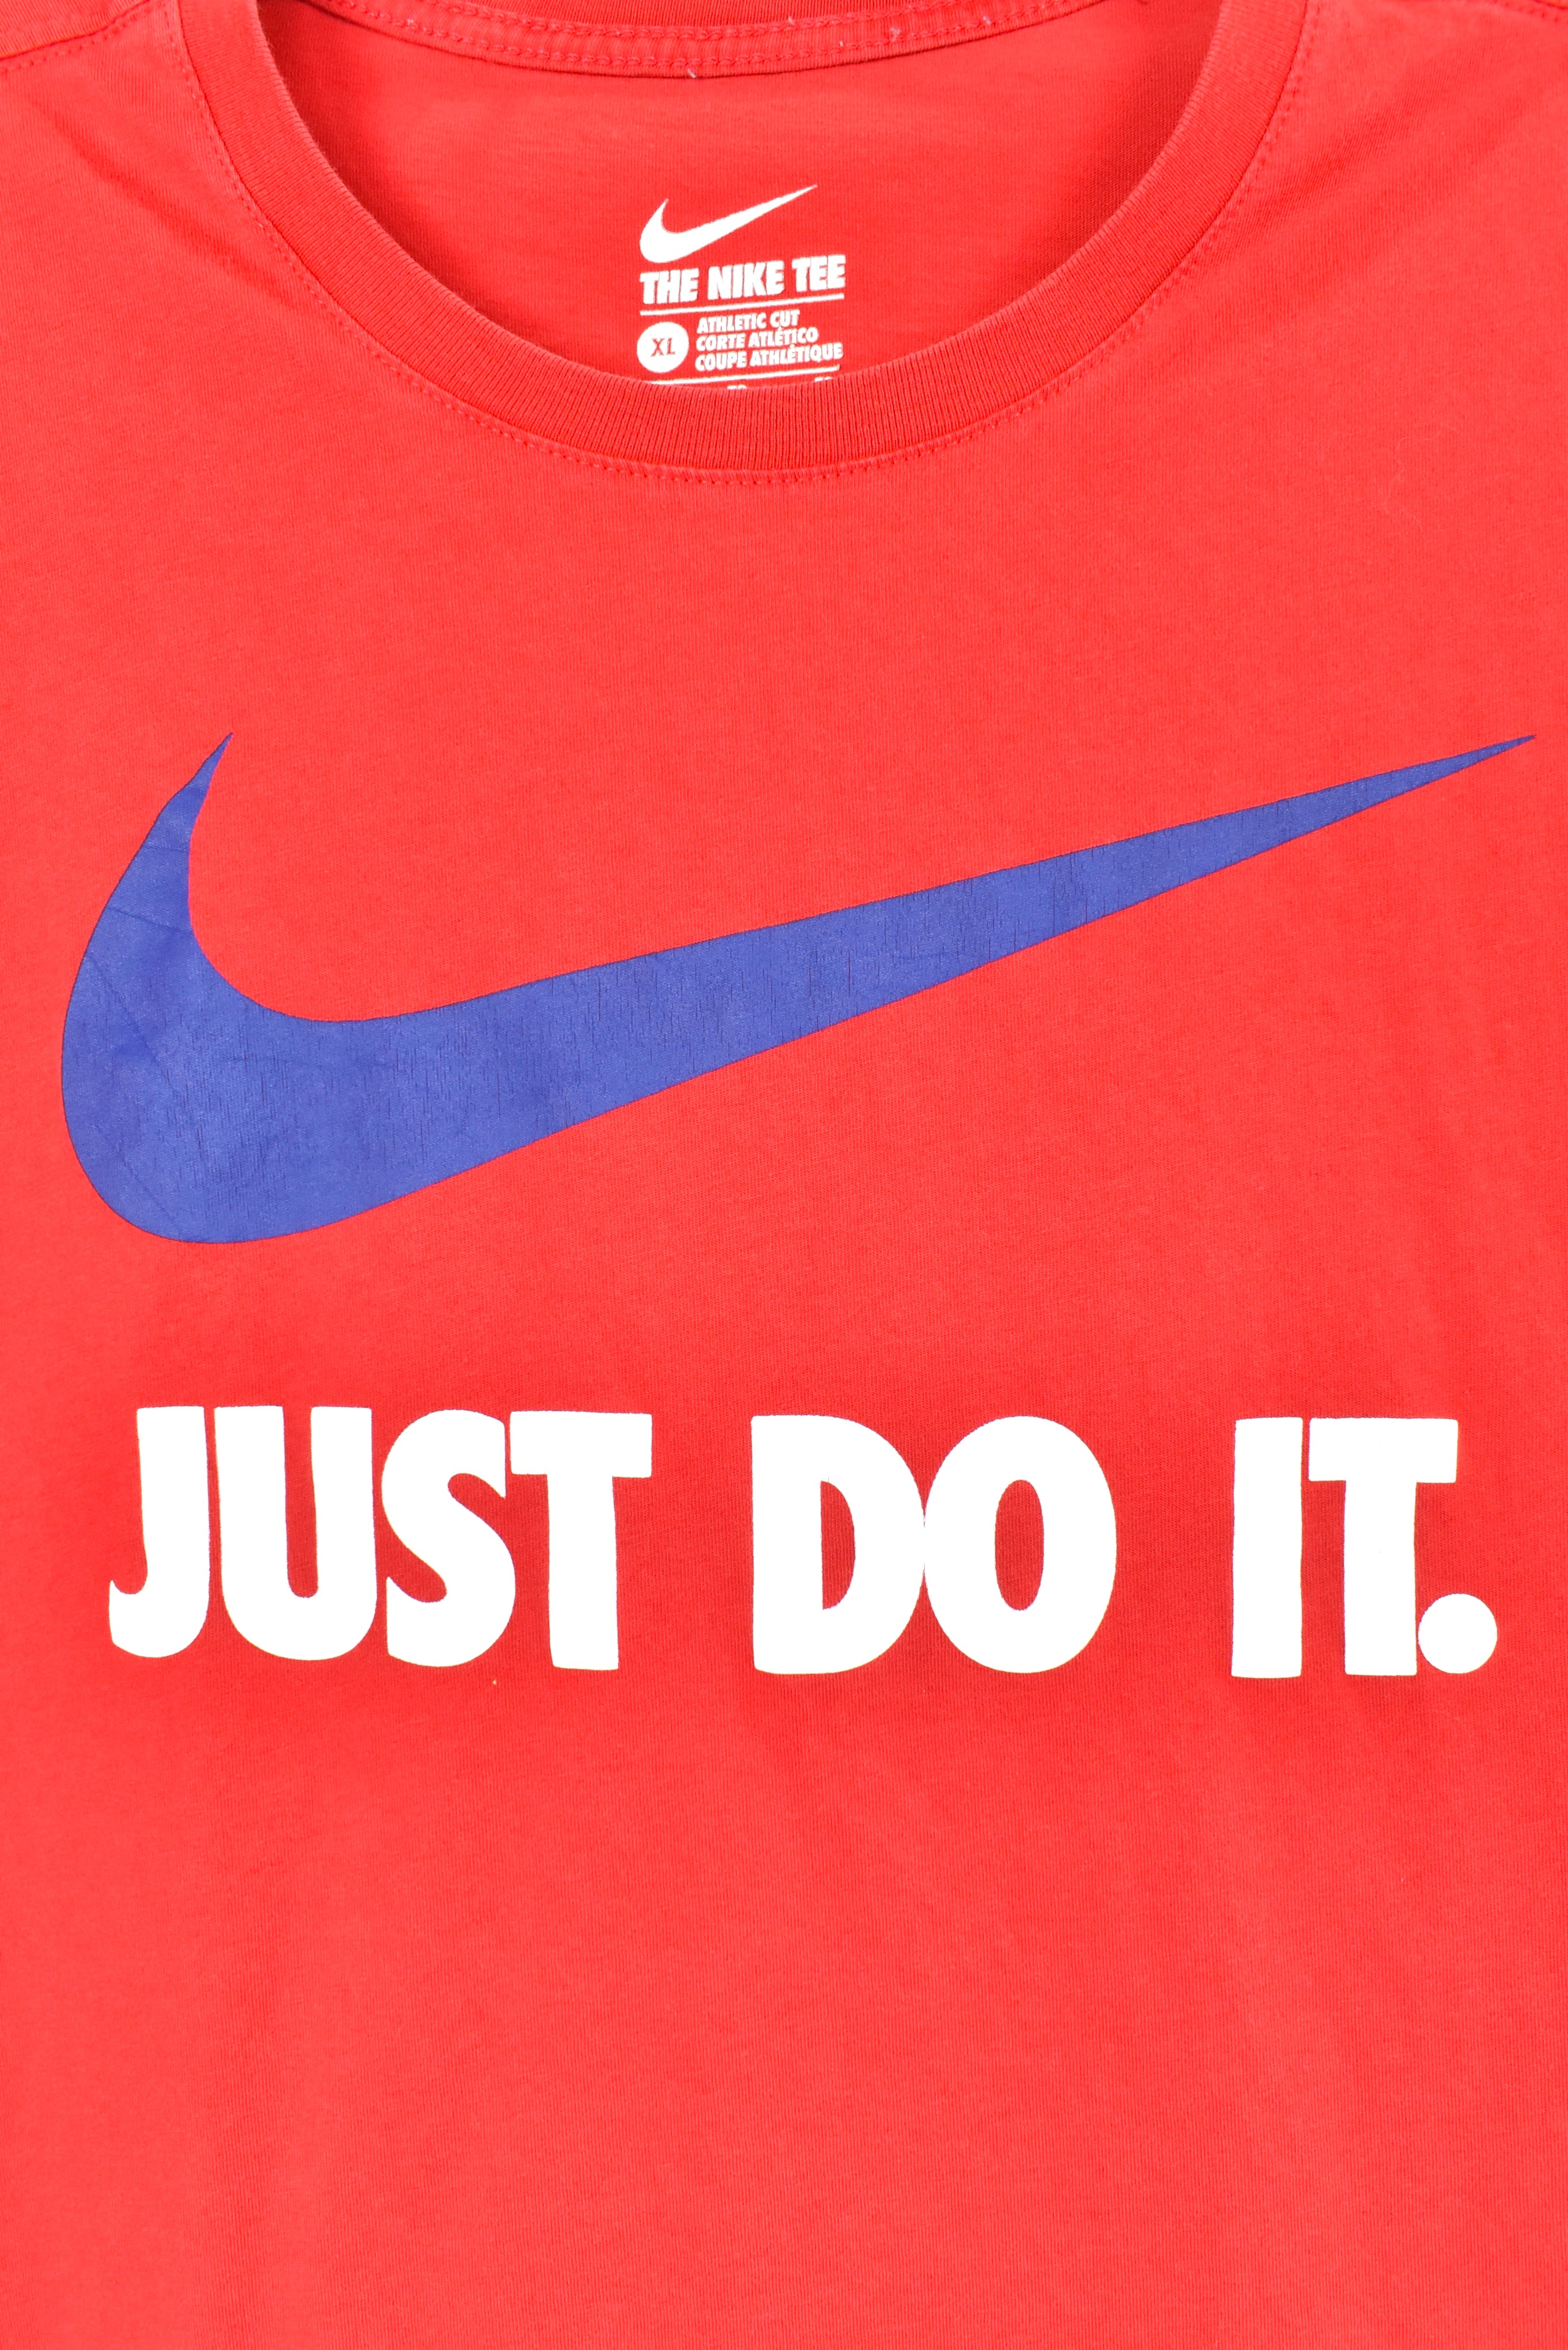 Modern Nike shirt, red graphic tee - AU XL NIKE